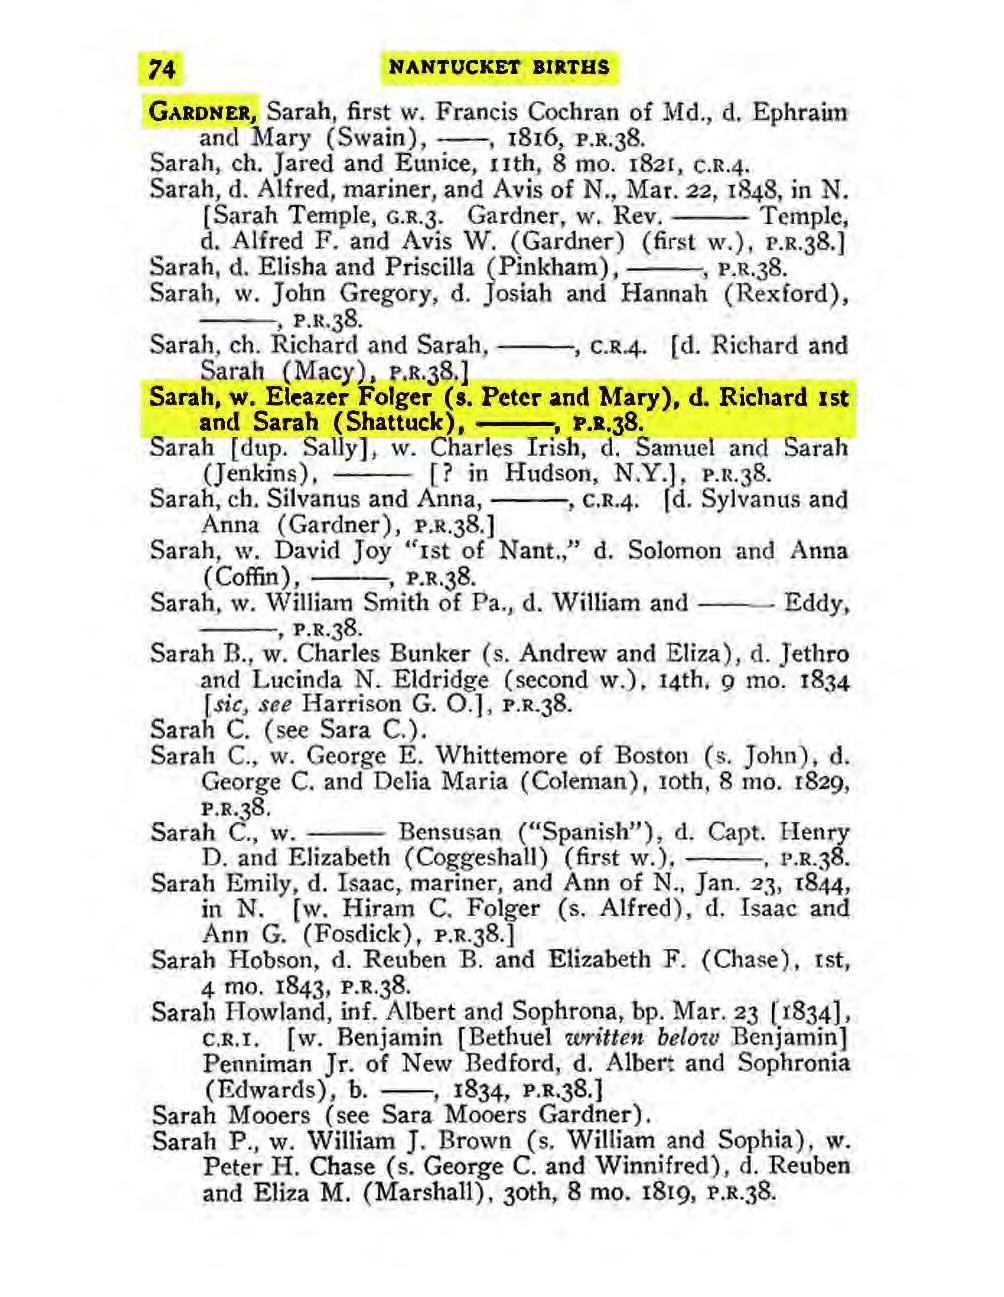 74 NANTUCKET BIRTHS GARDNER, Sarah, first w. Francis Cochran of Md., d. Ephraim and Mary (Swain),, 1816, P.R.38. Sarah, ch. Jared and Eunice, IIth, 8 mo. 182J, c.r.4. Sarah, d.